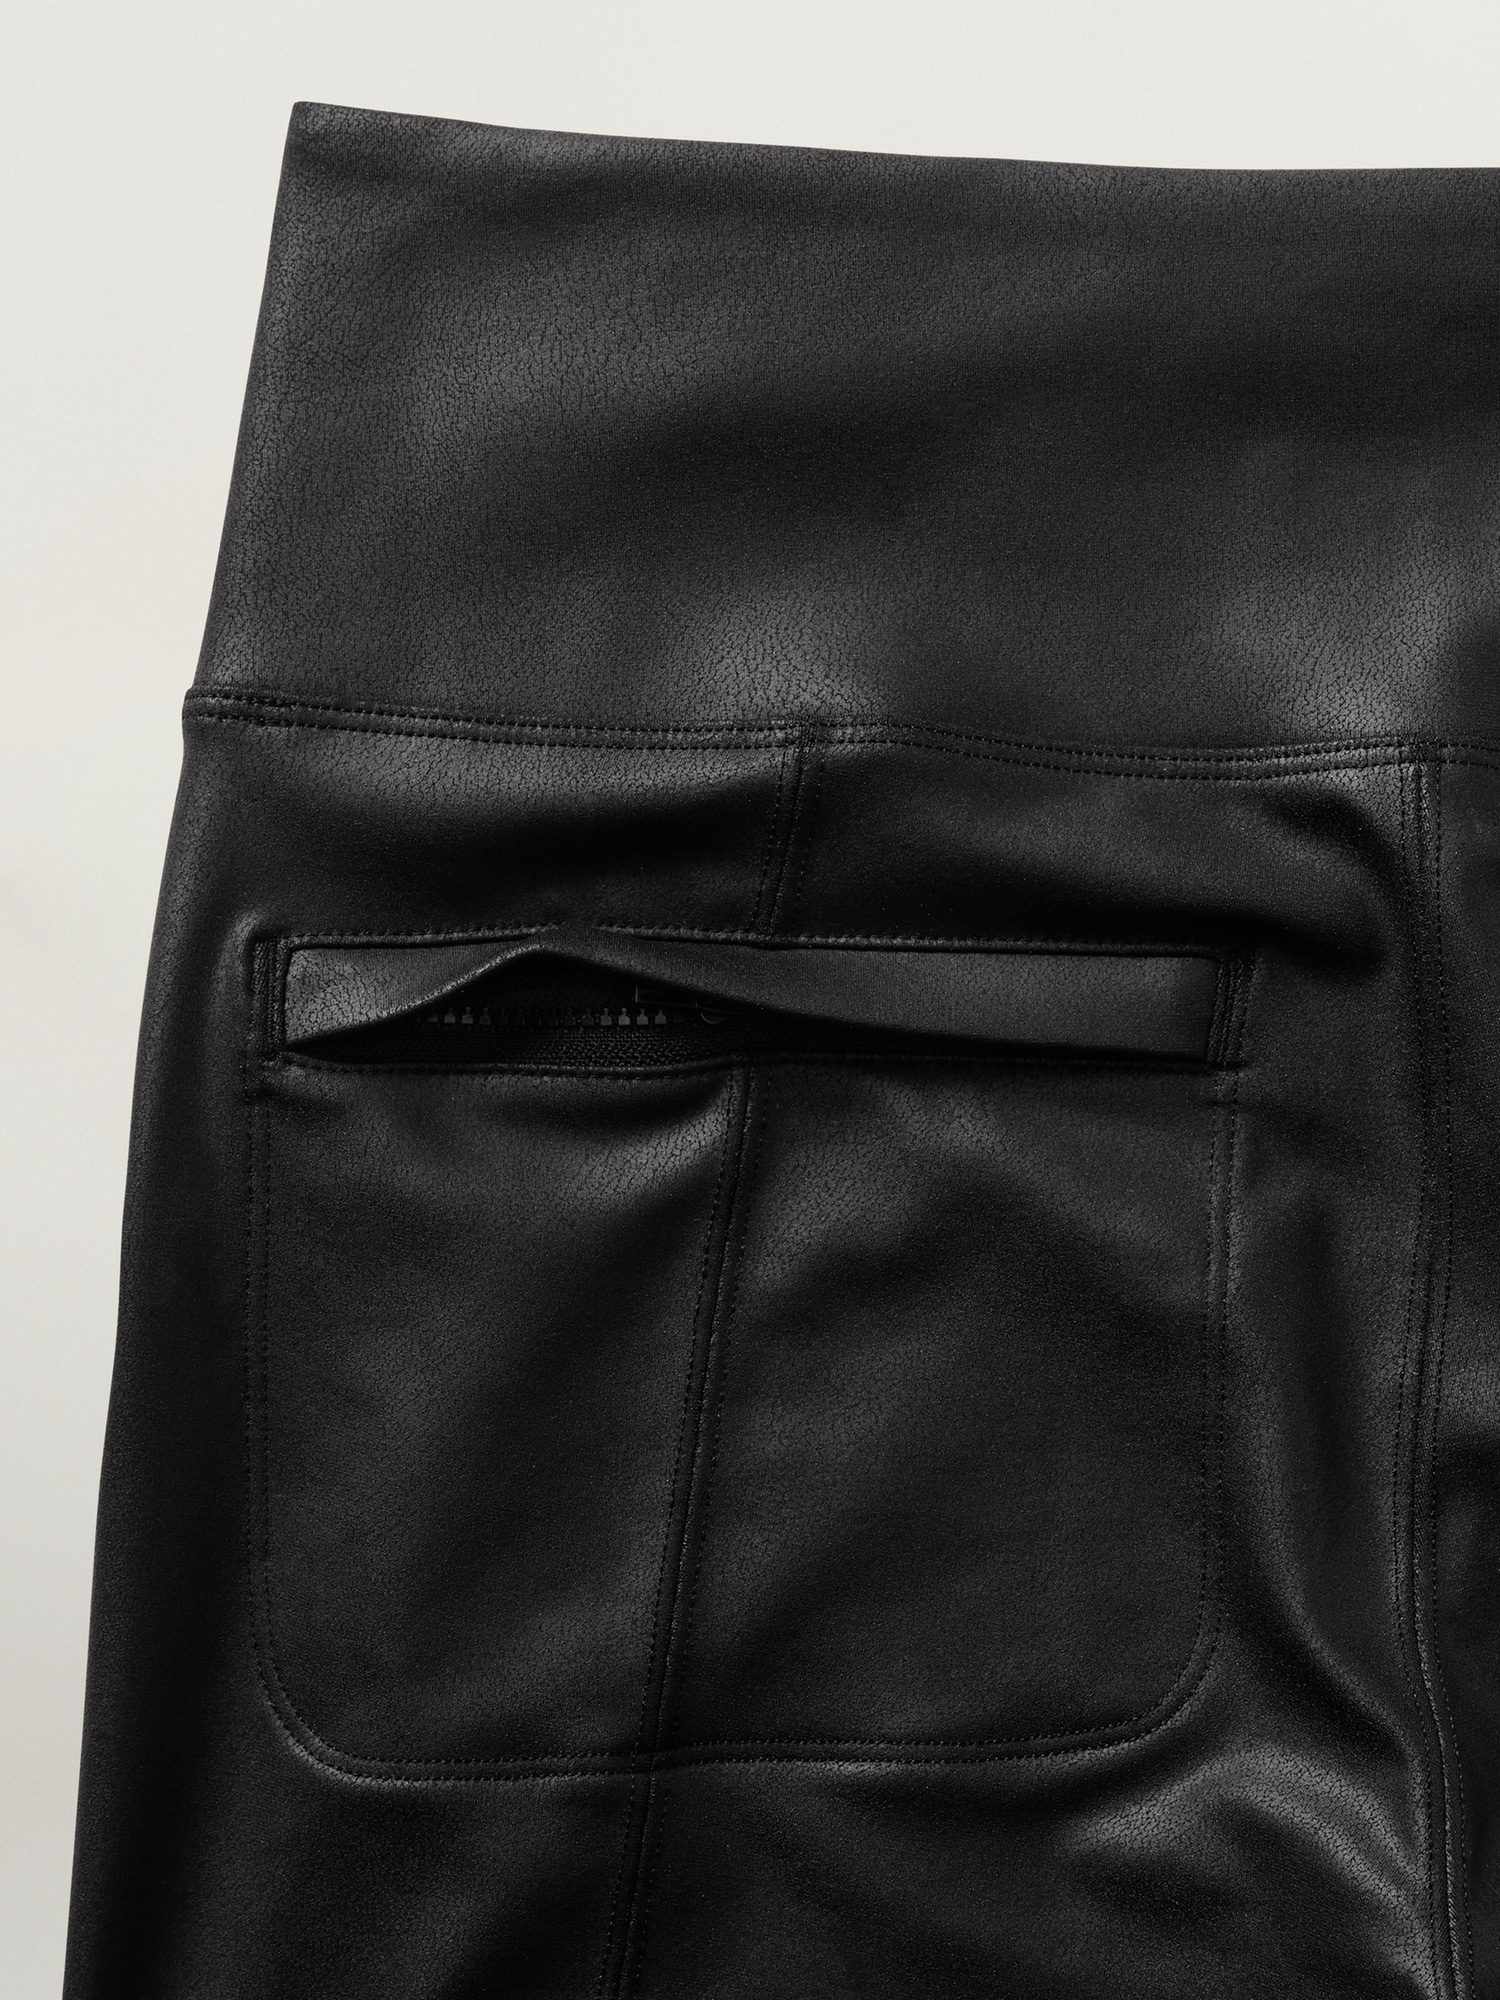 ATHLETA Size XS Black Gleam Tight 2.0 Leggings Faux Leather Style